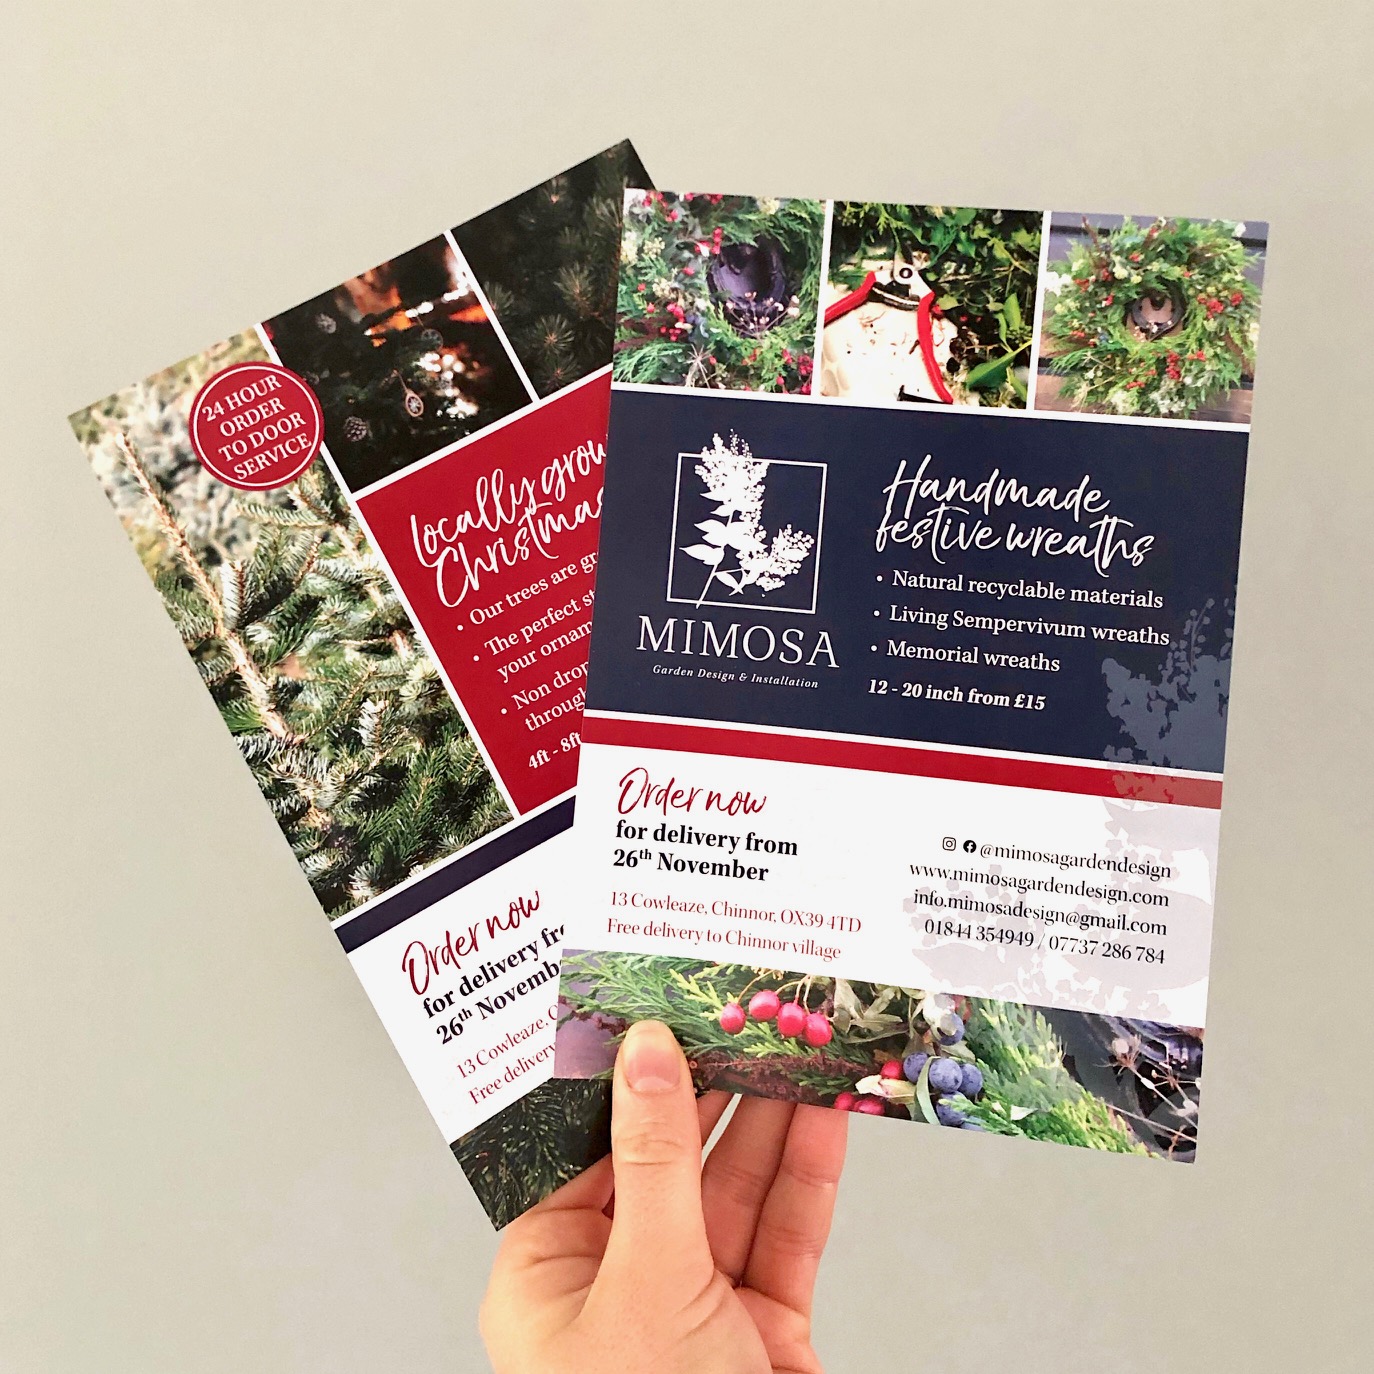 Mimosa Garden Design leaflet design and print